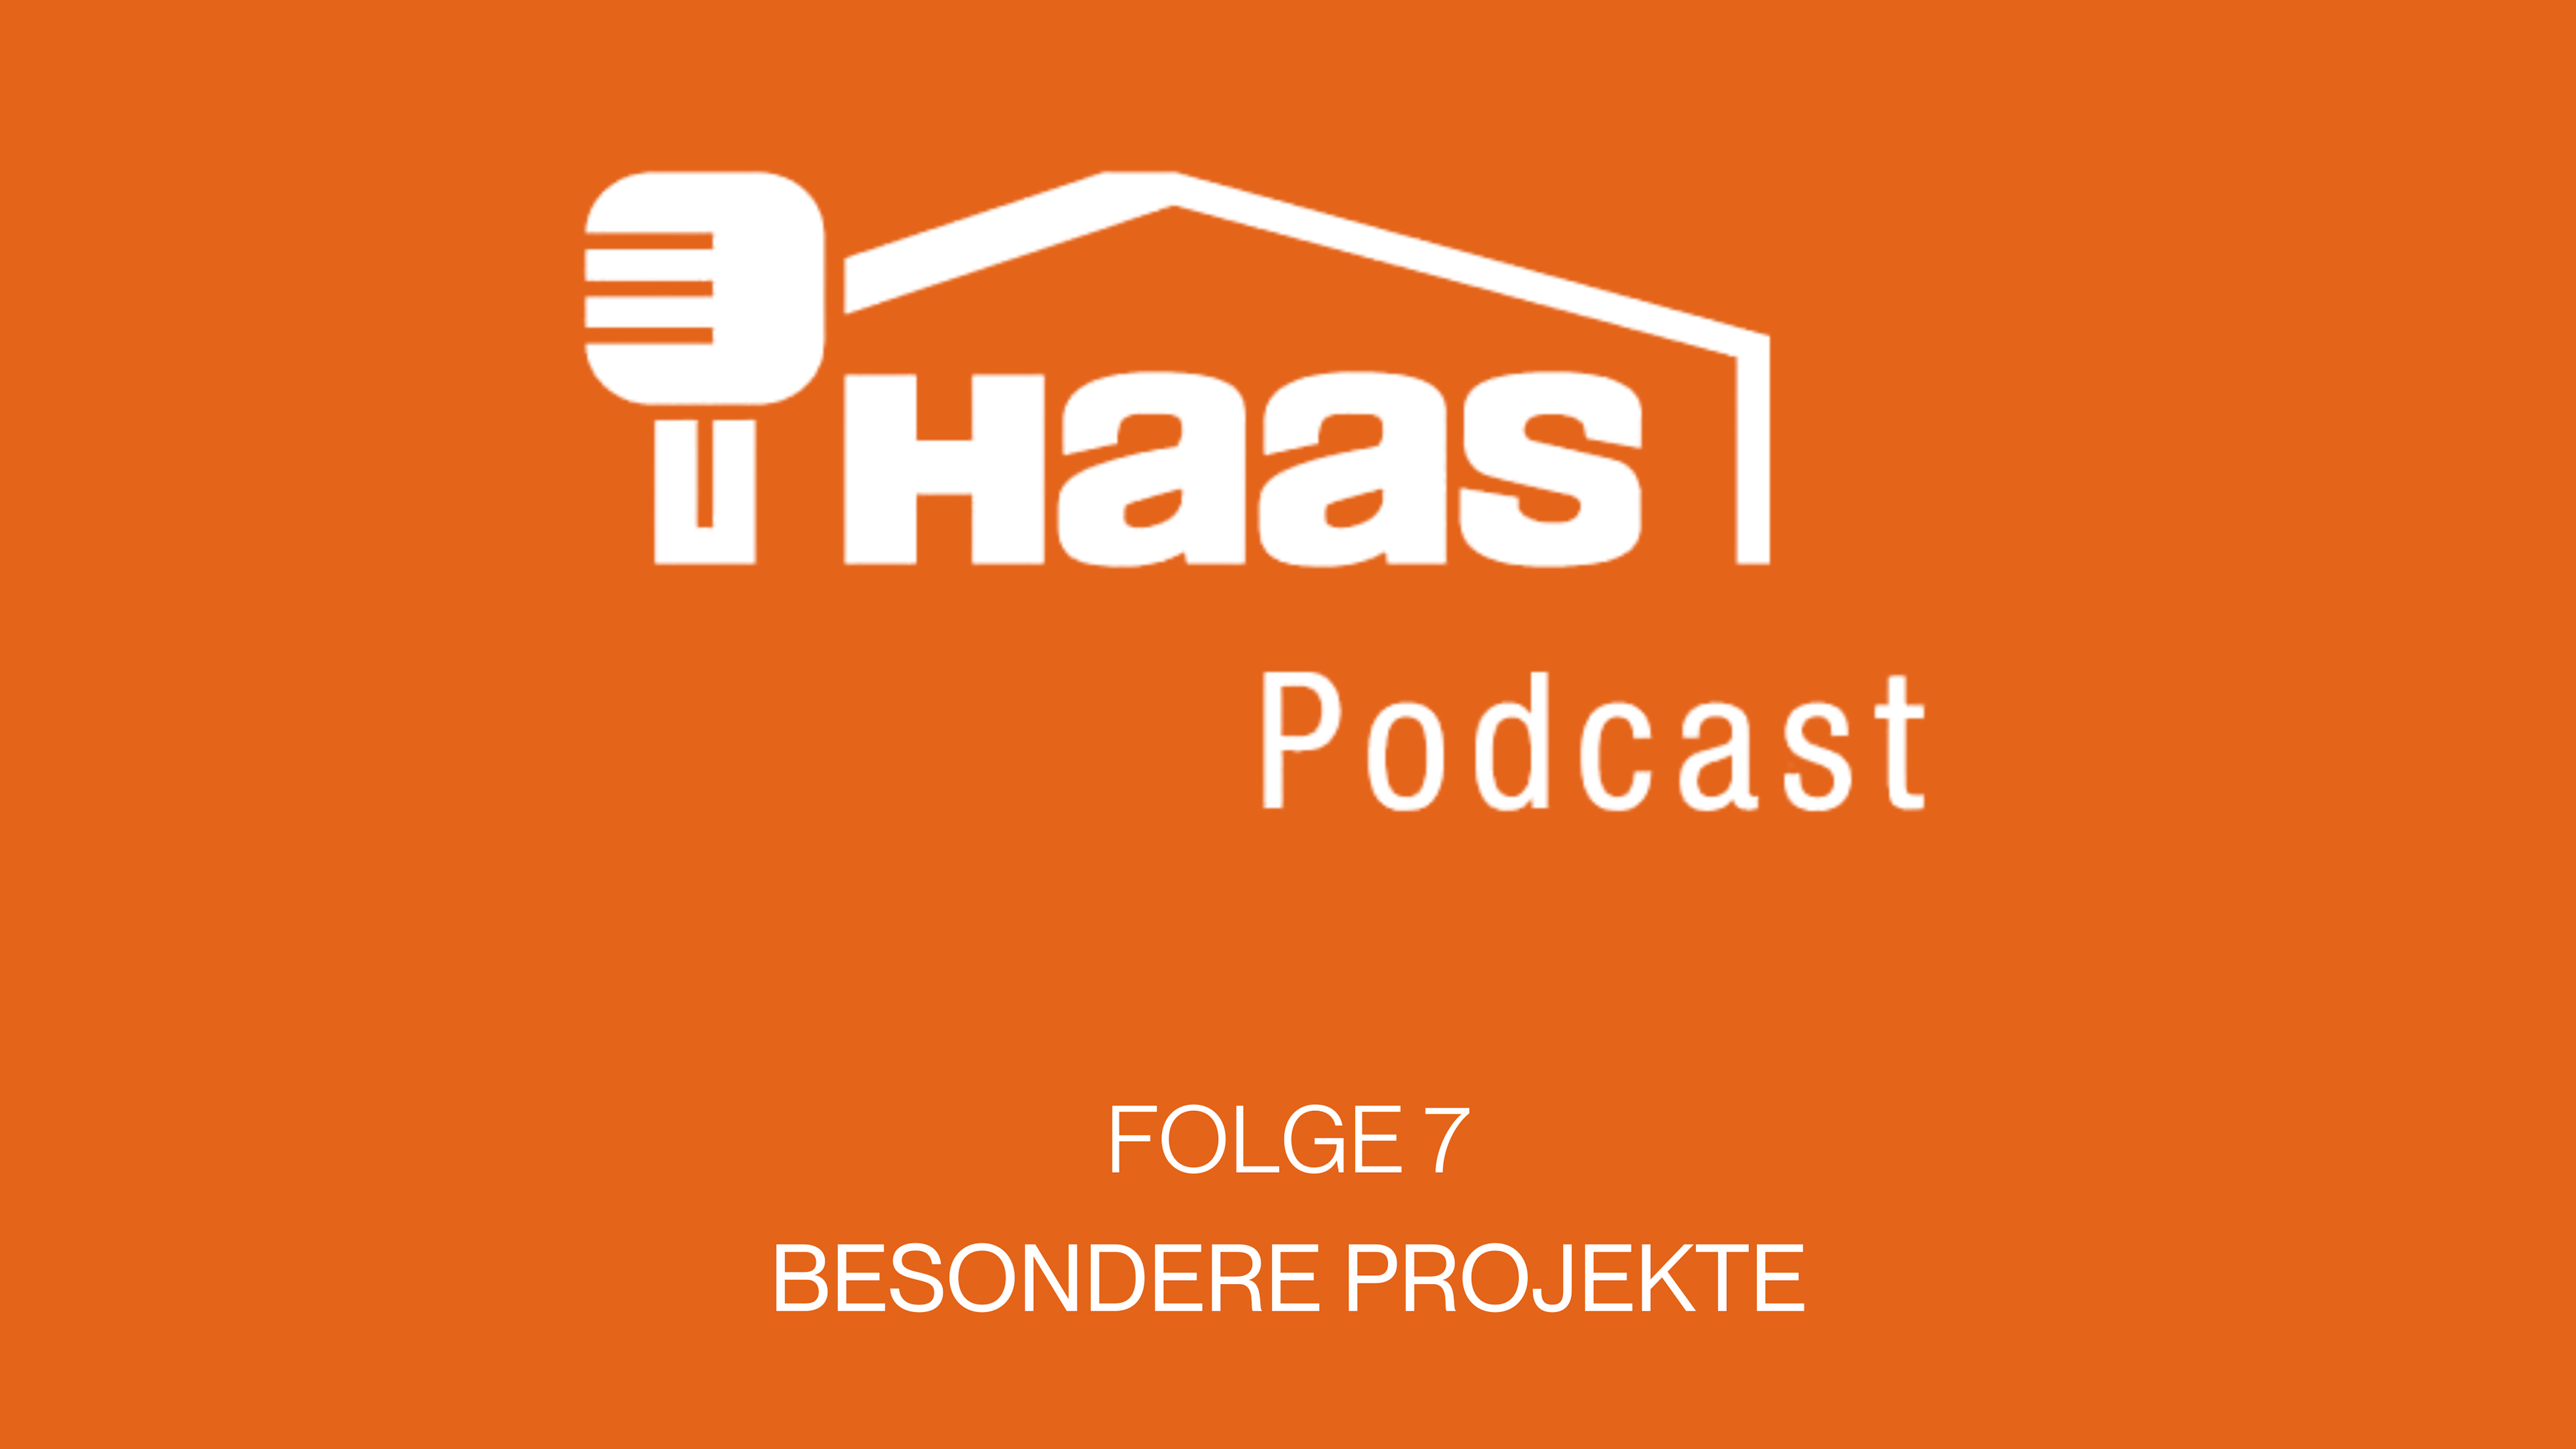 Haas Fertigbau Podcast aus einem Holz geschnitzt Folge 7